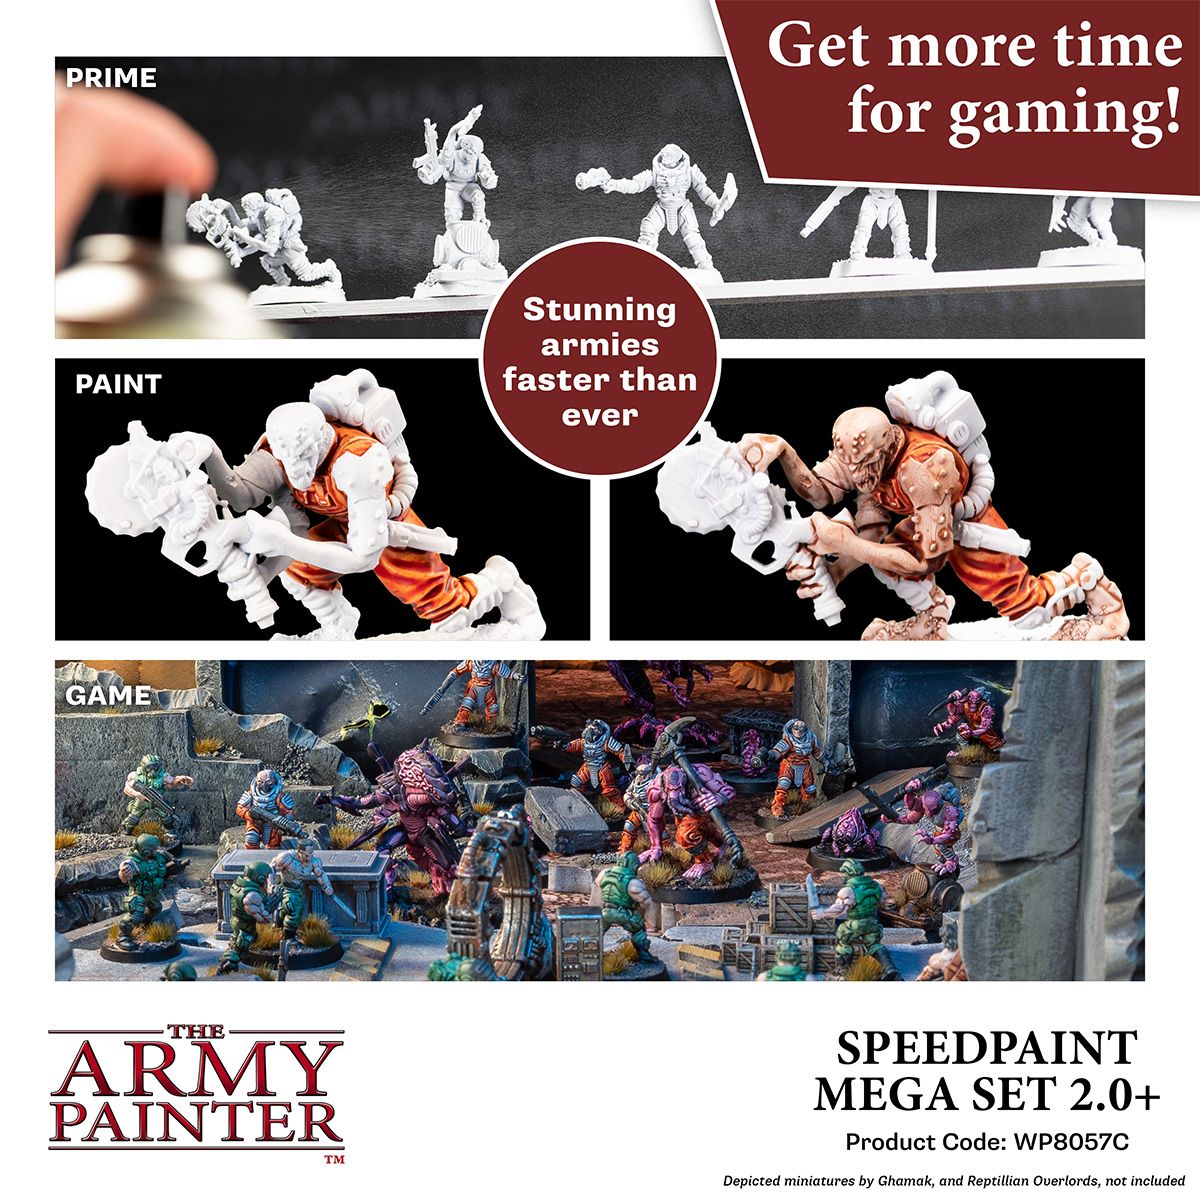 The Army Painter: Speedpaint Mega Set 2.0